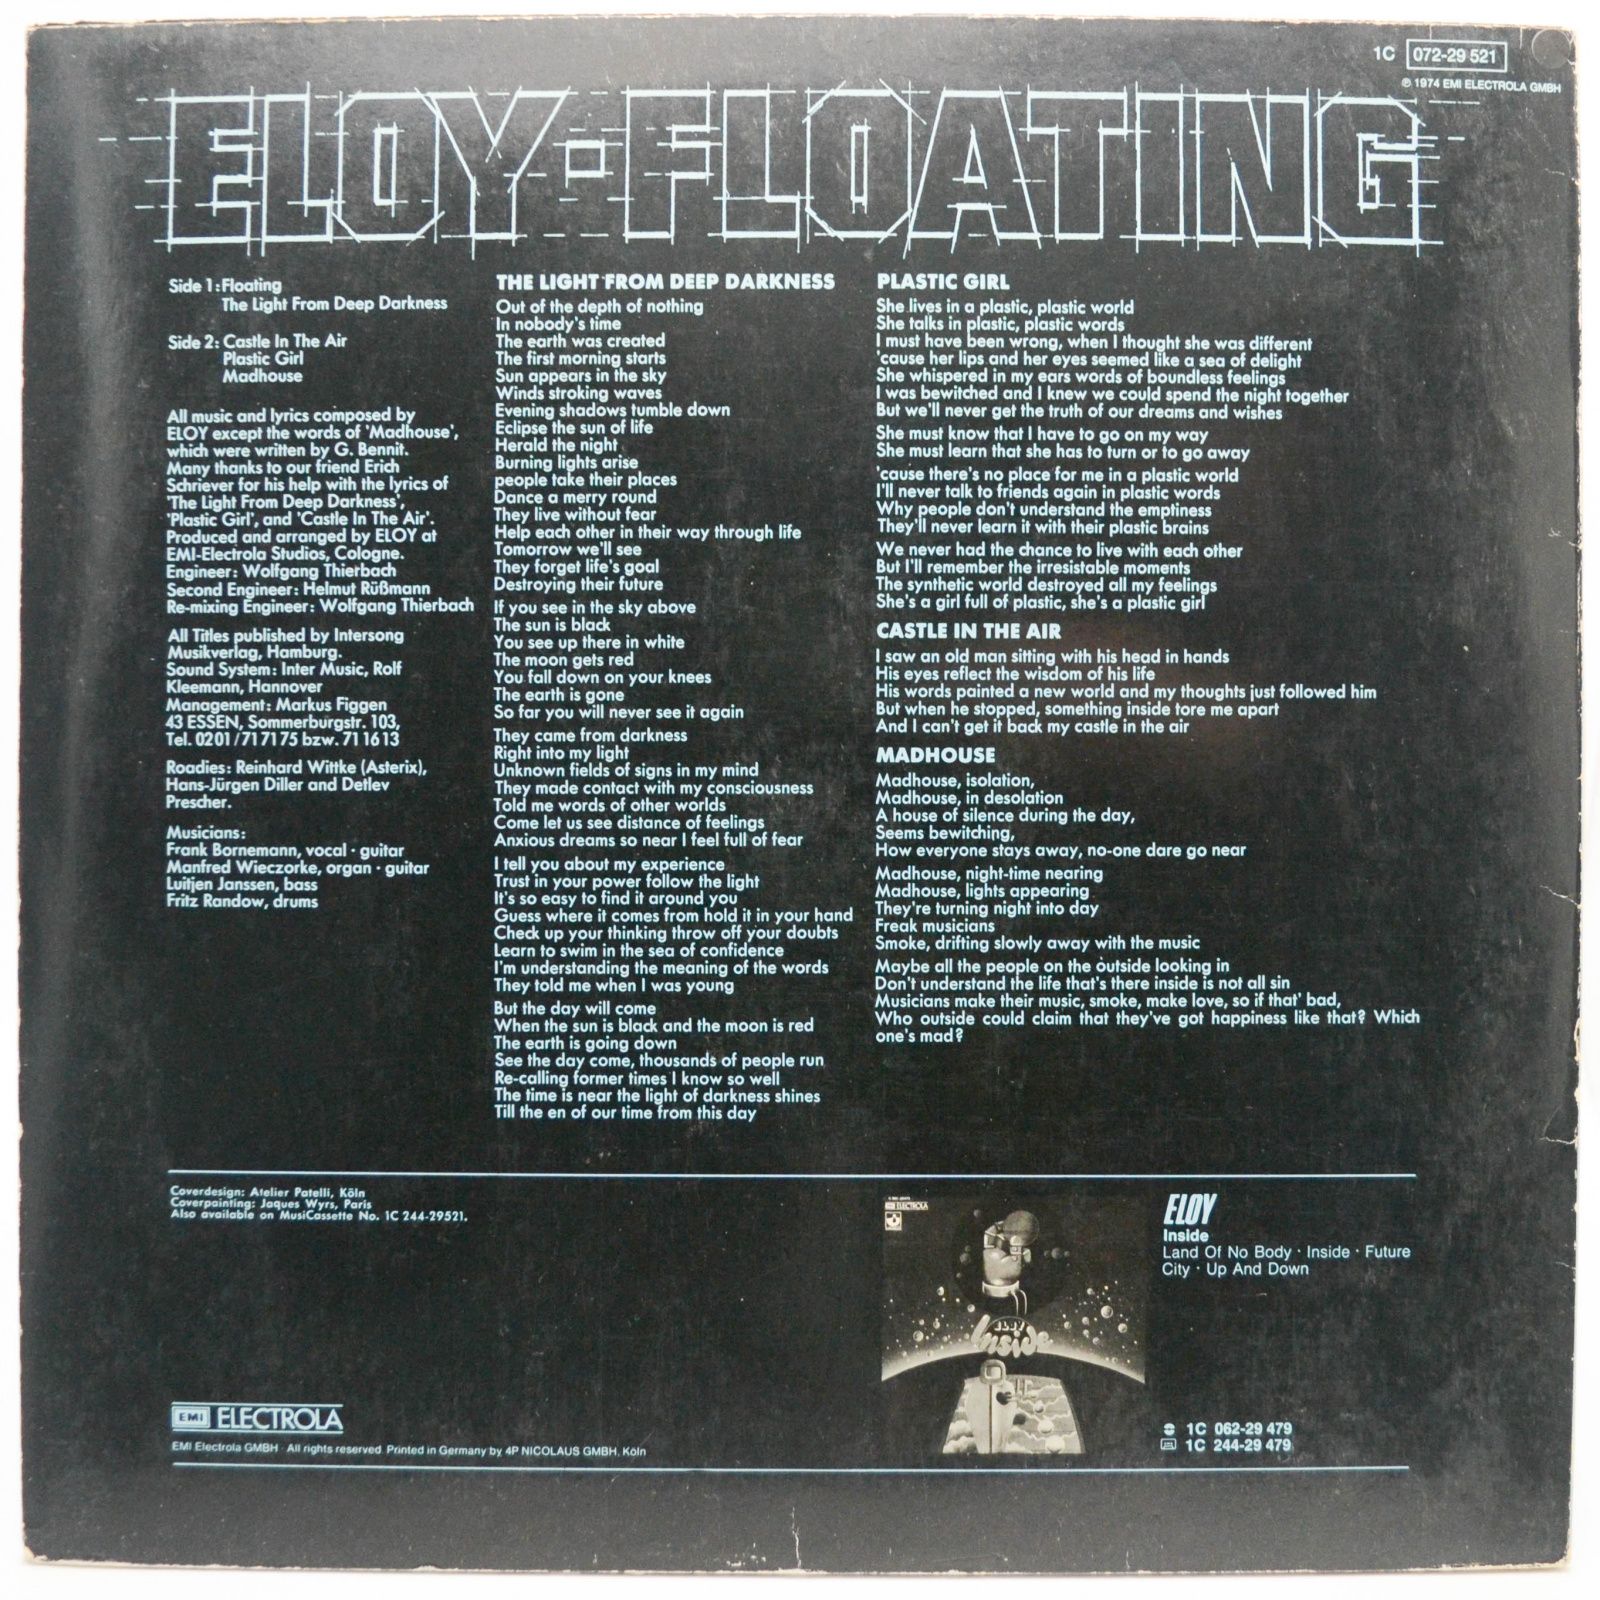 Eloy — Floating, 1974